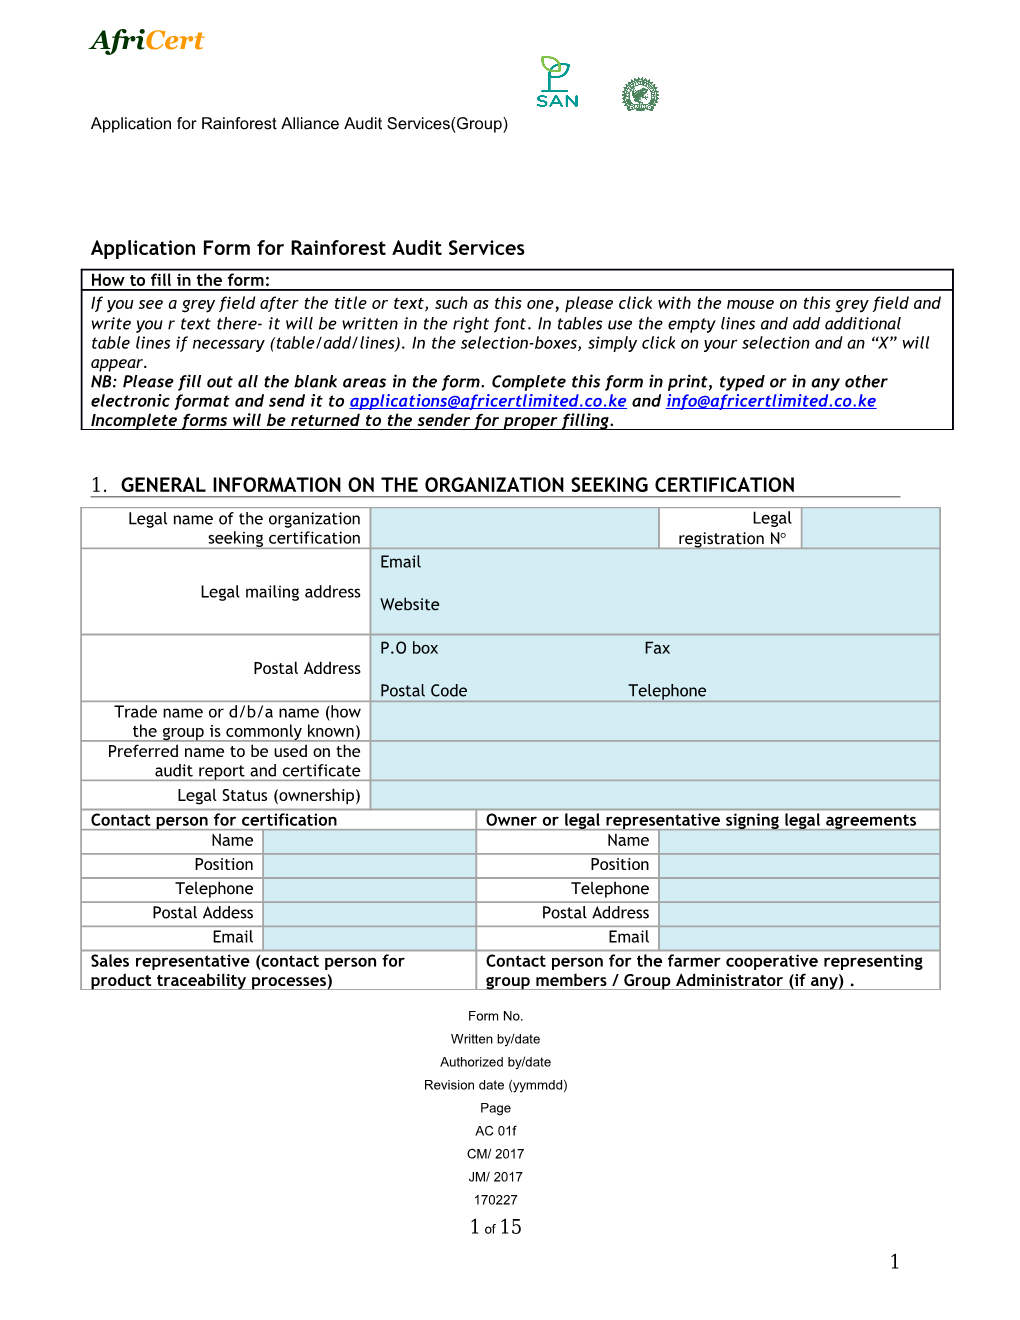 Application Form for Rainforest Audit Services